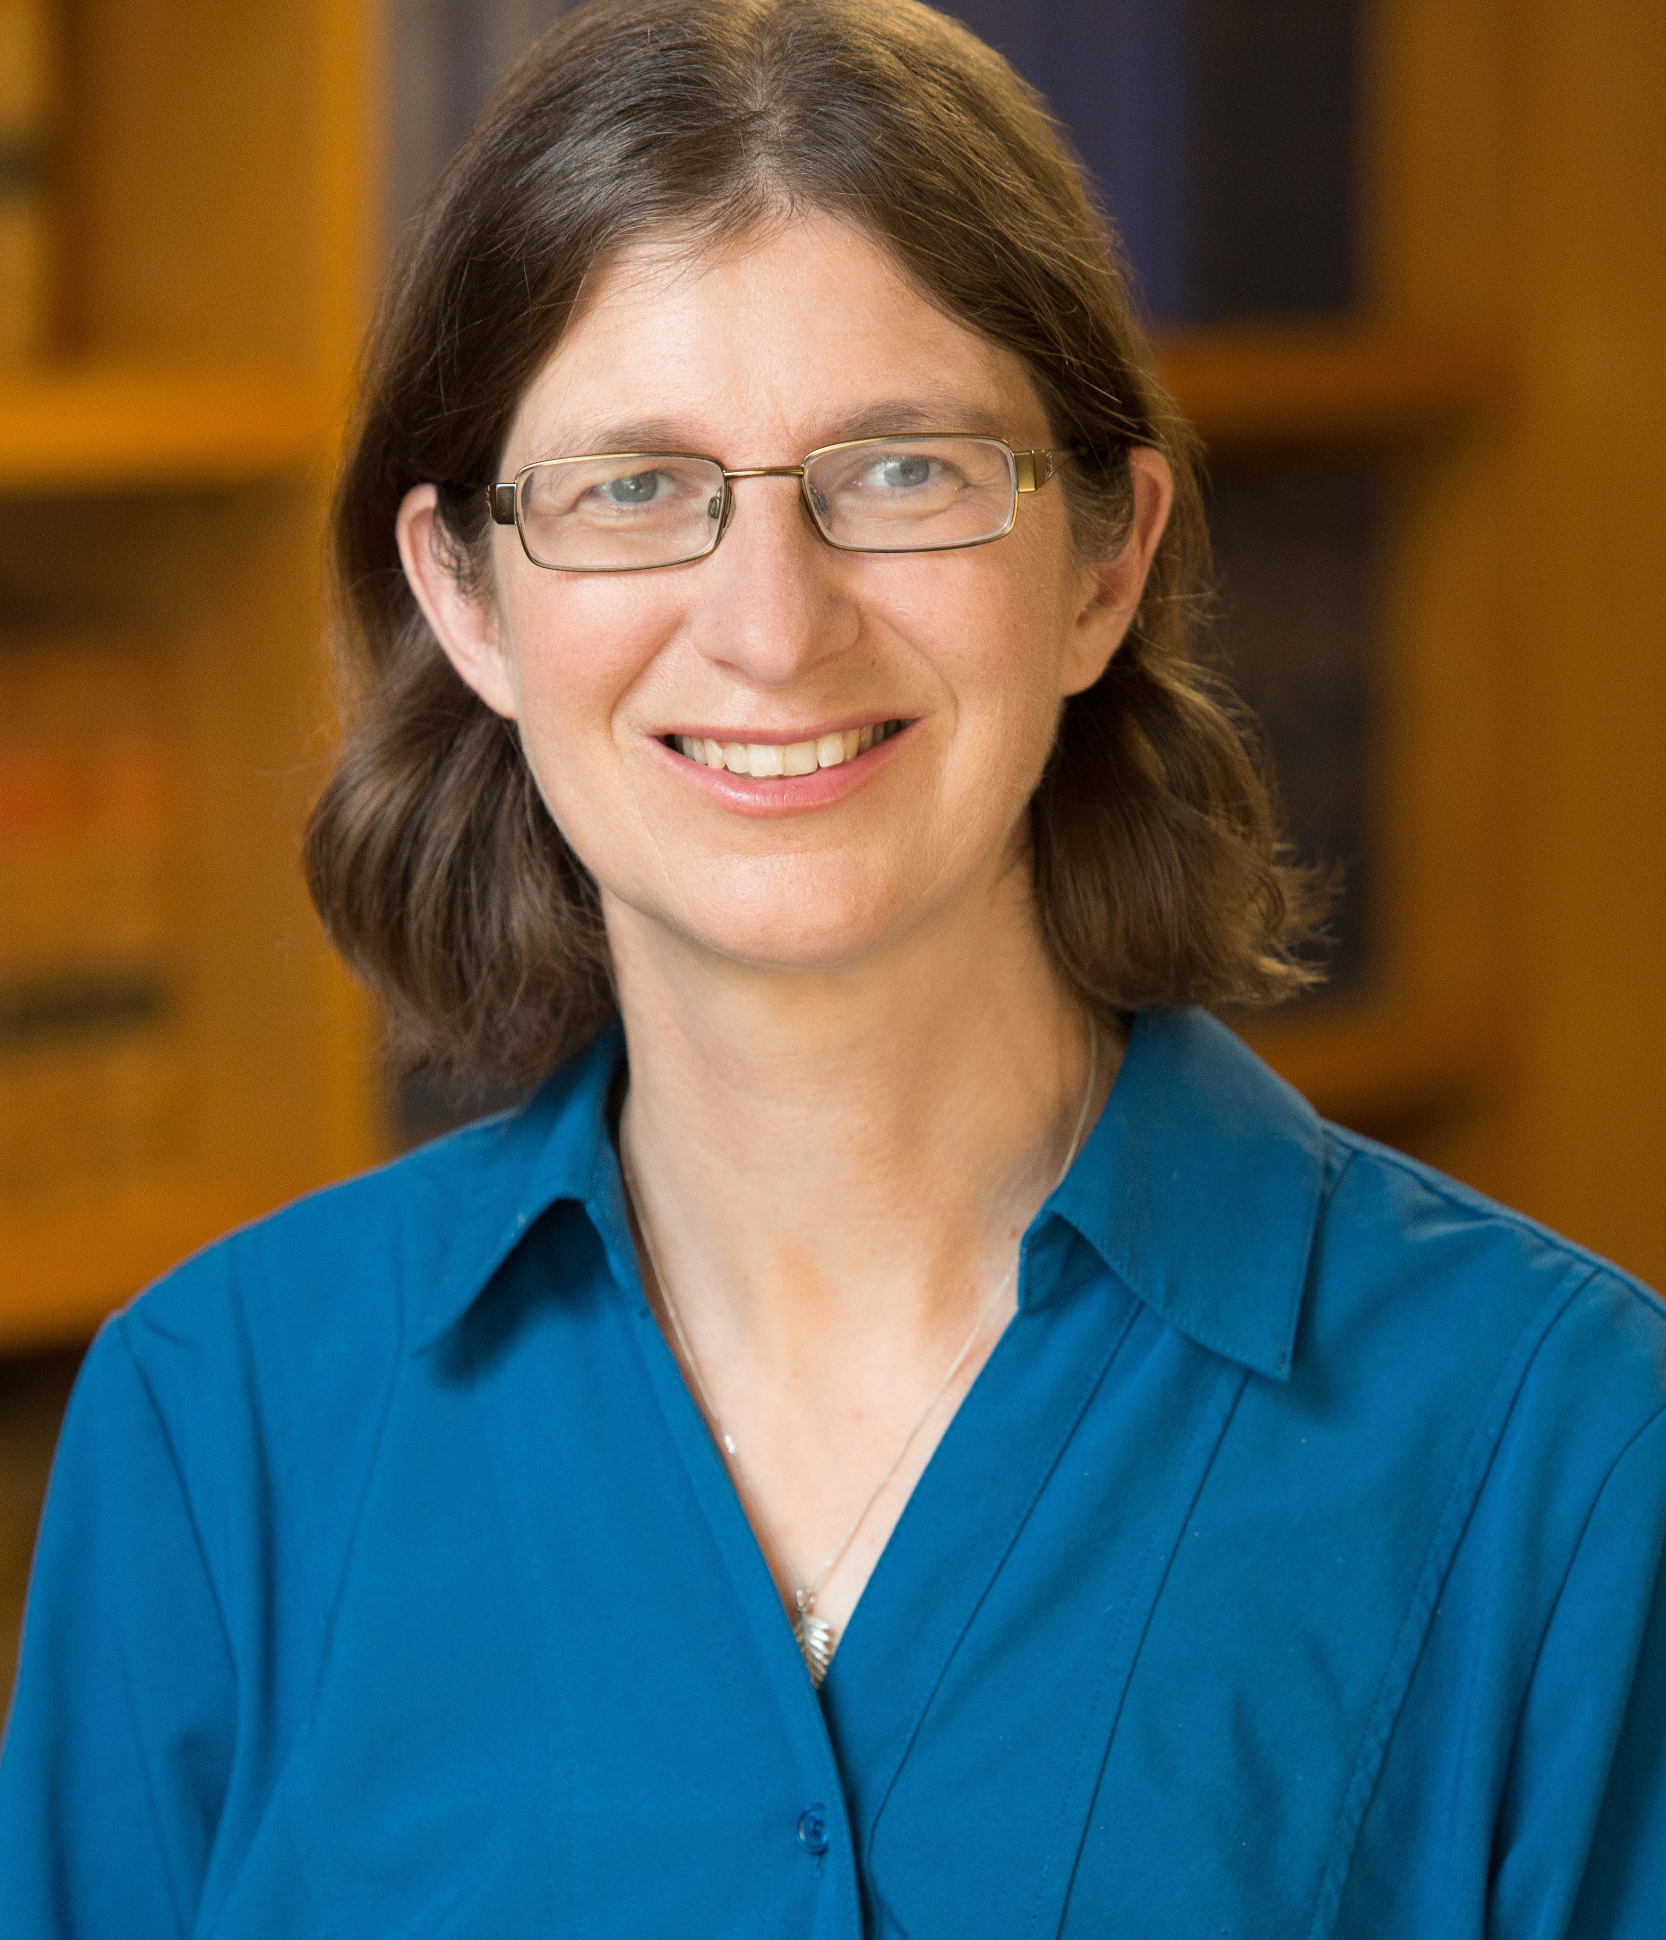 A professional headshot of professor Anastasia Telesetsky.